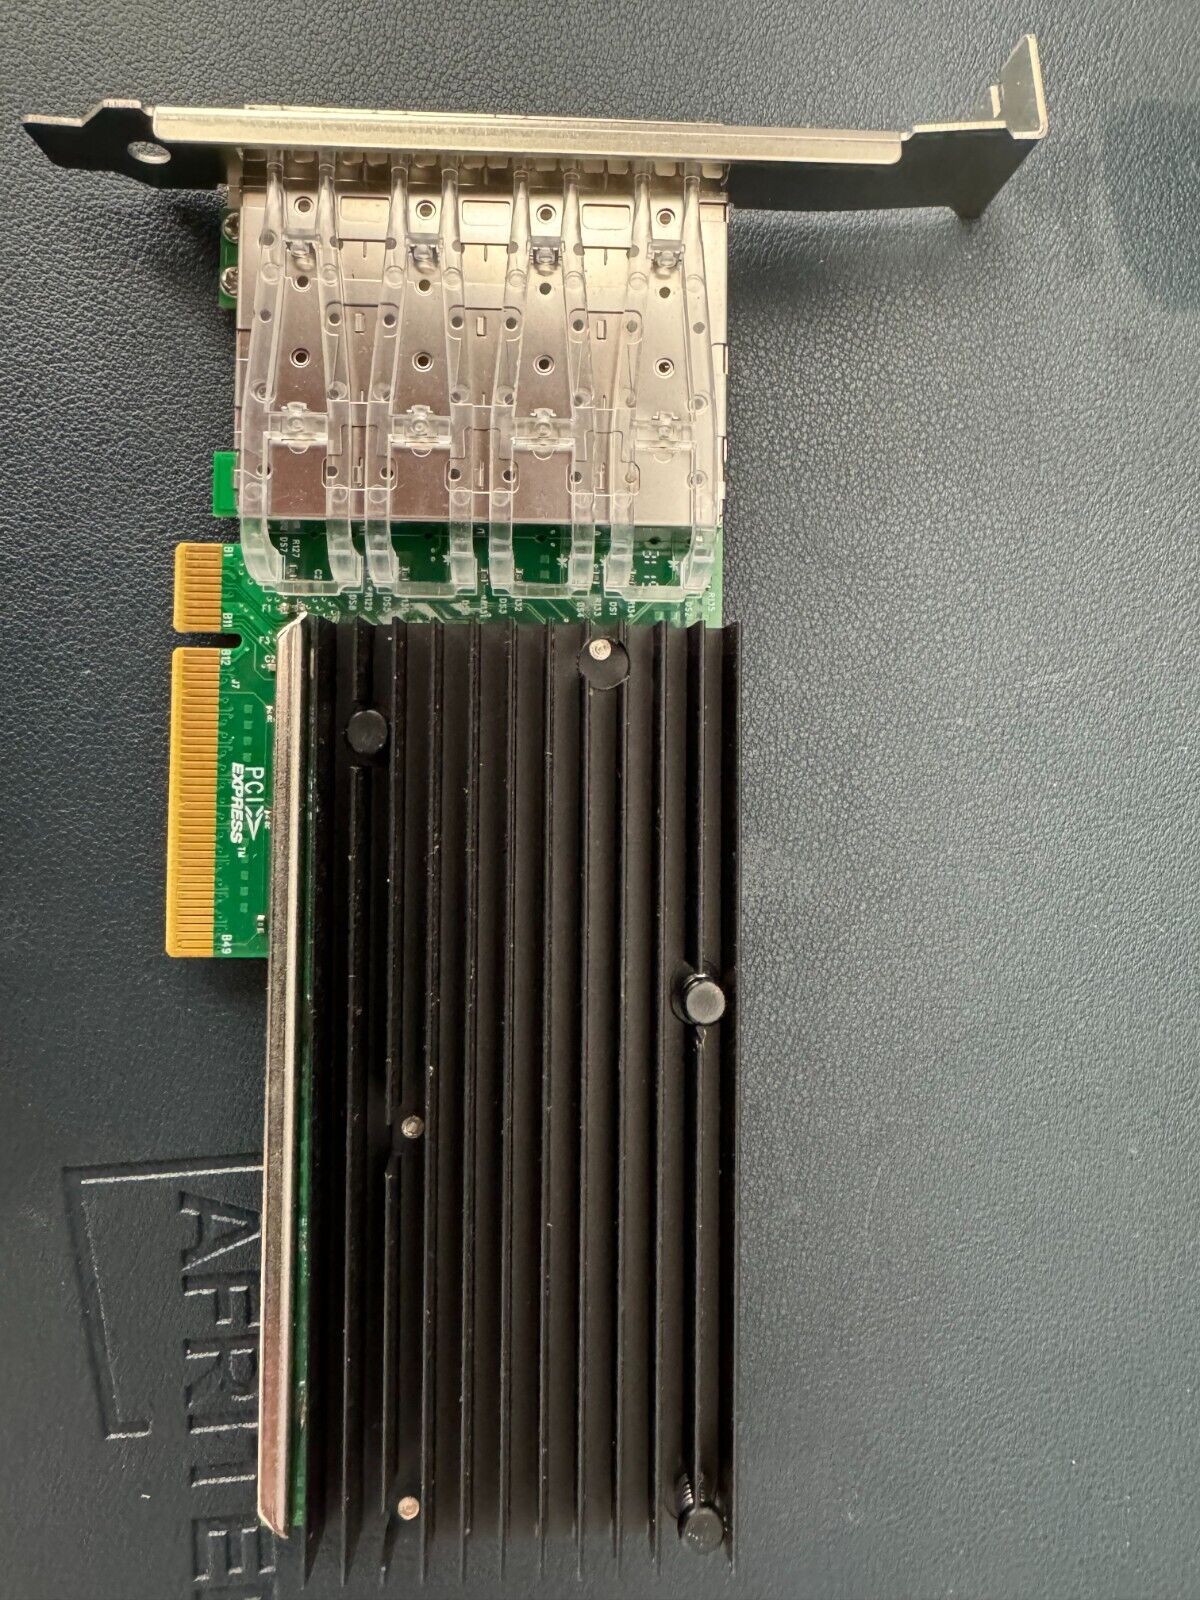 Intel X710-DA4 Quad-Port 10GB SFP+ PCIe Network Interface Card + brackets